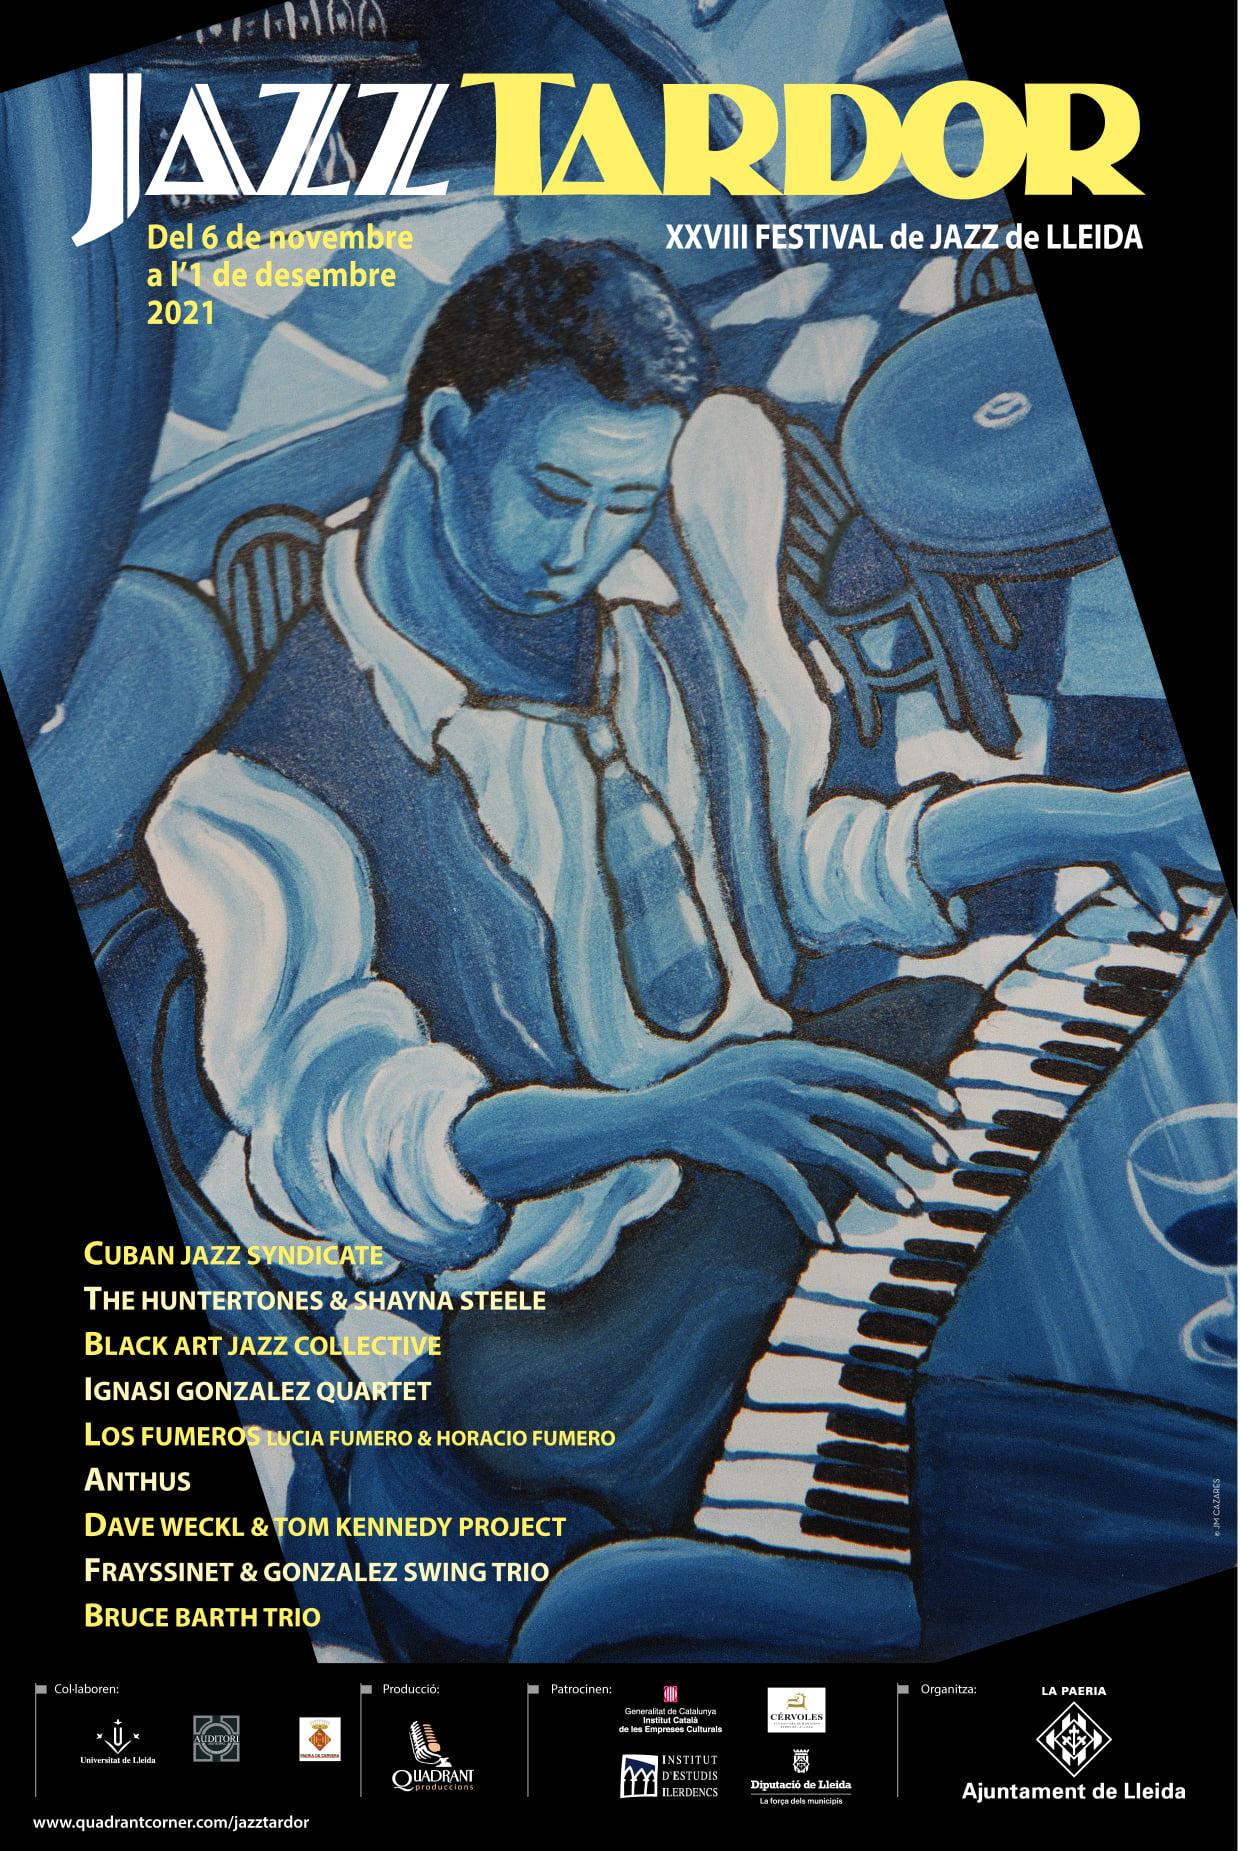 The Cuban Jazz Syndicate - JazzTardor 2021